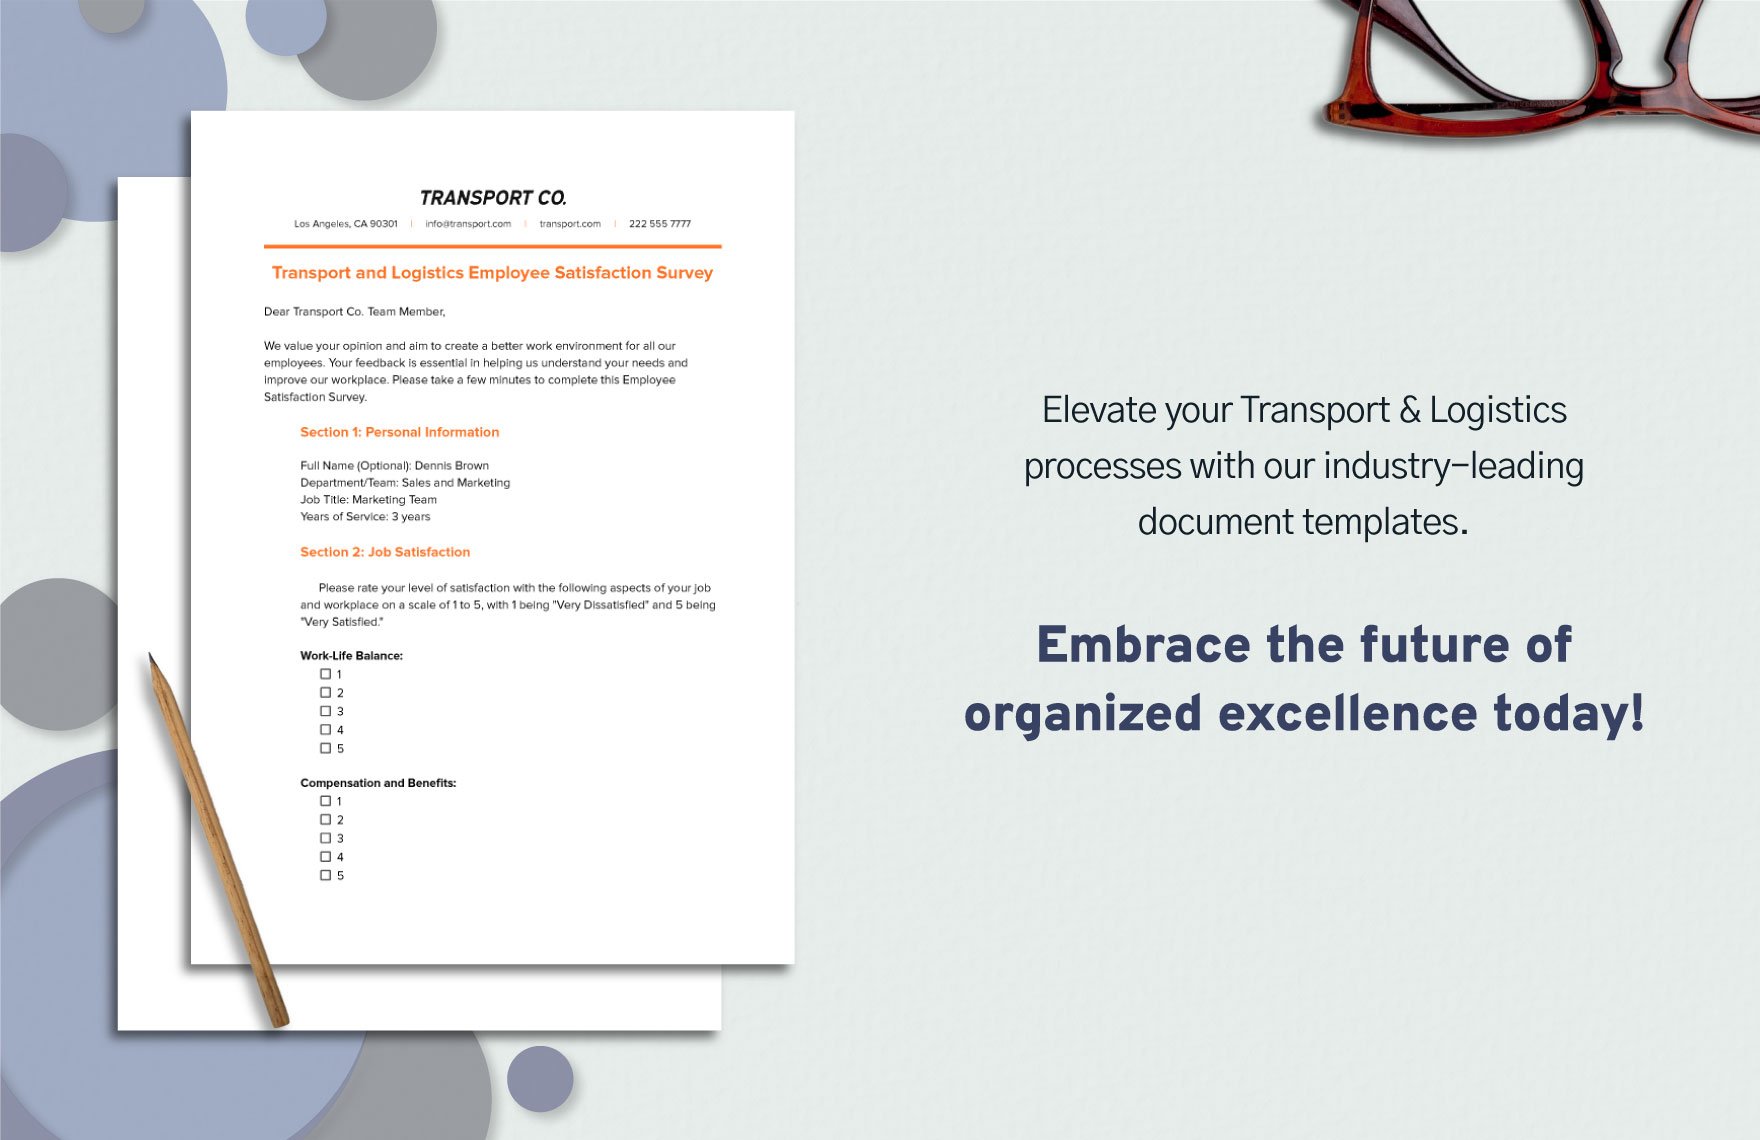 Transport and Logistics Employee Satisfaction Survey Template